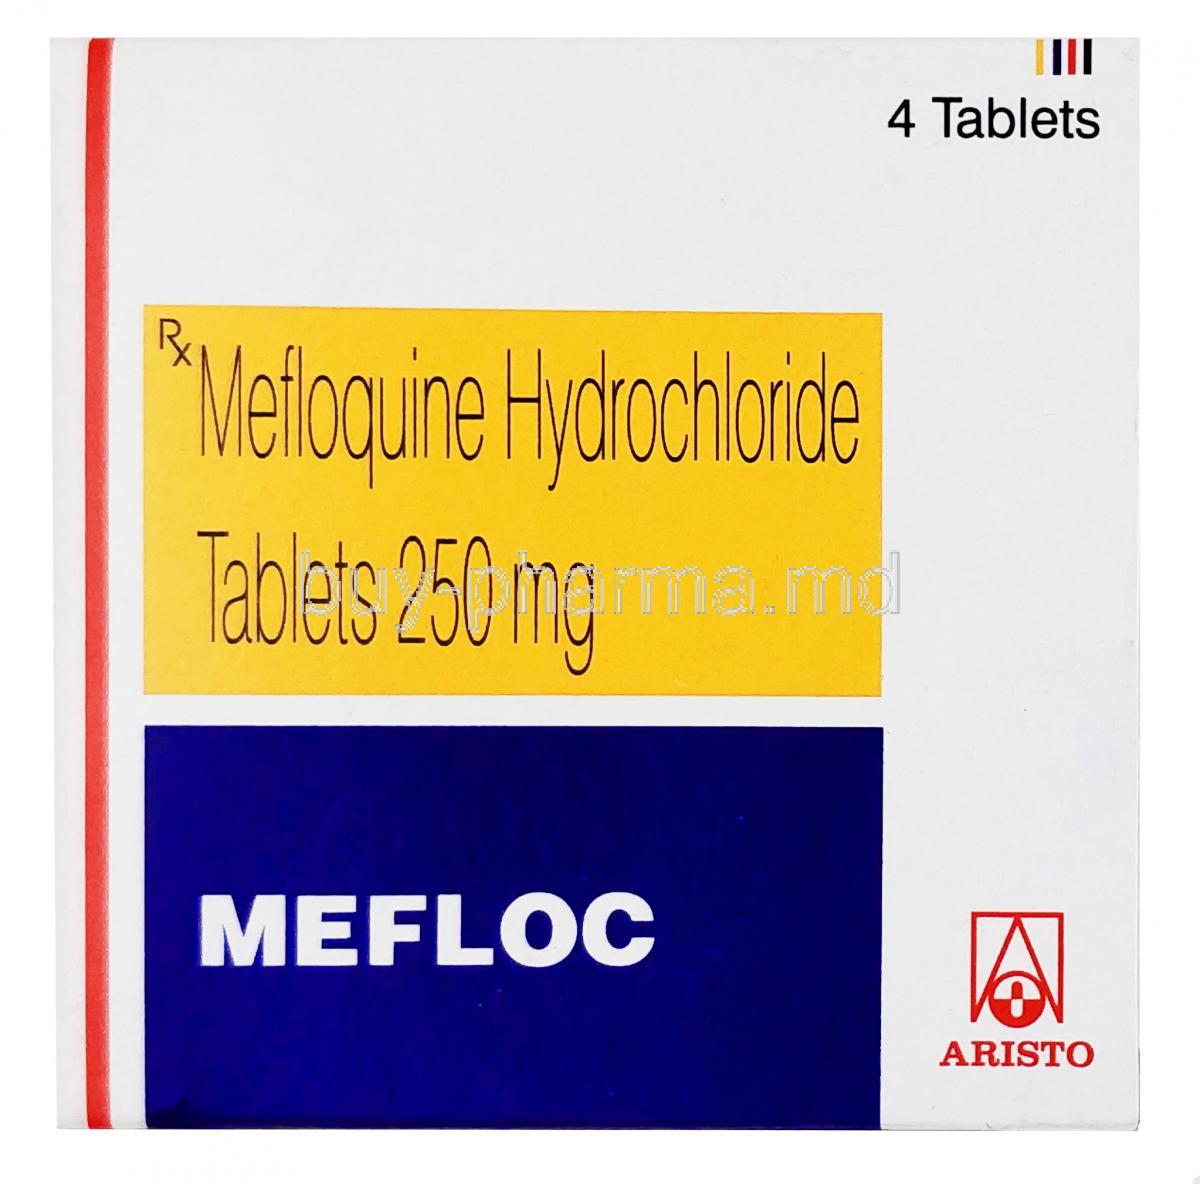 Mefloquine Hydrochloride 250mg, Mefloc, Aristo, Box front presentation